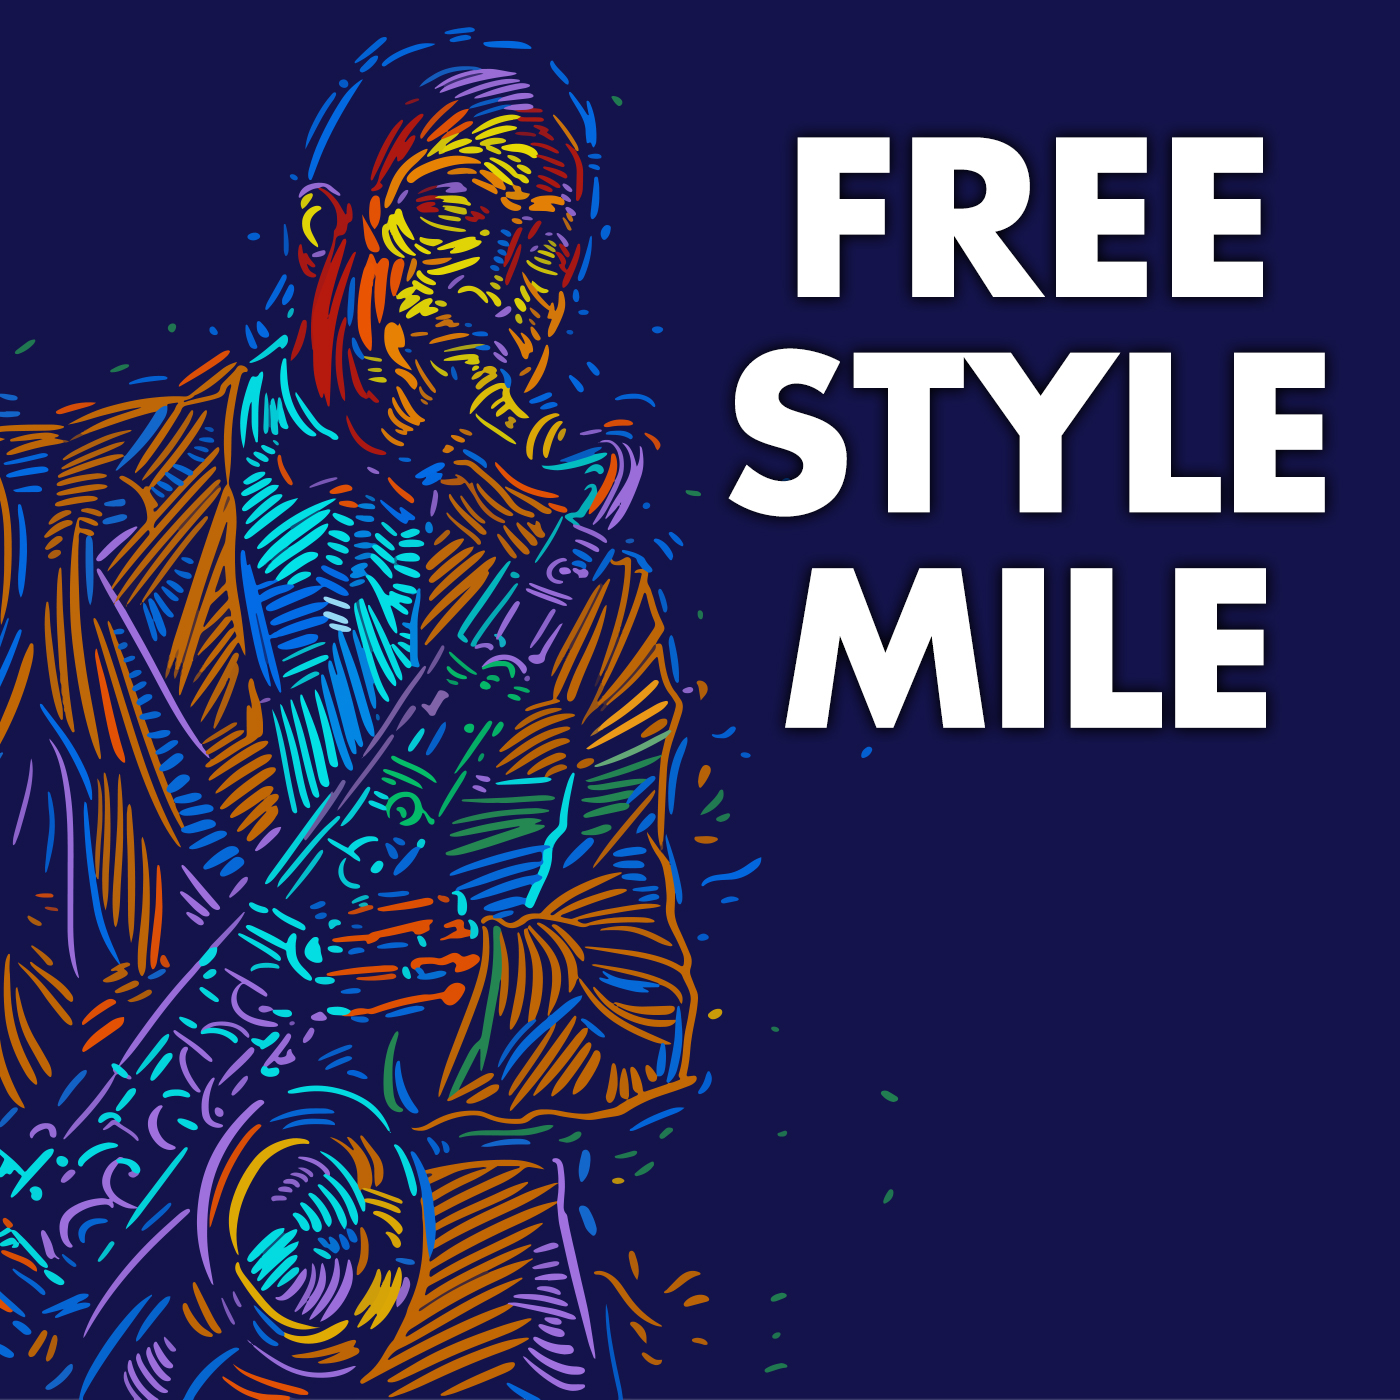 Free Style Mile